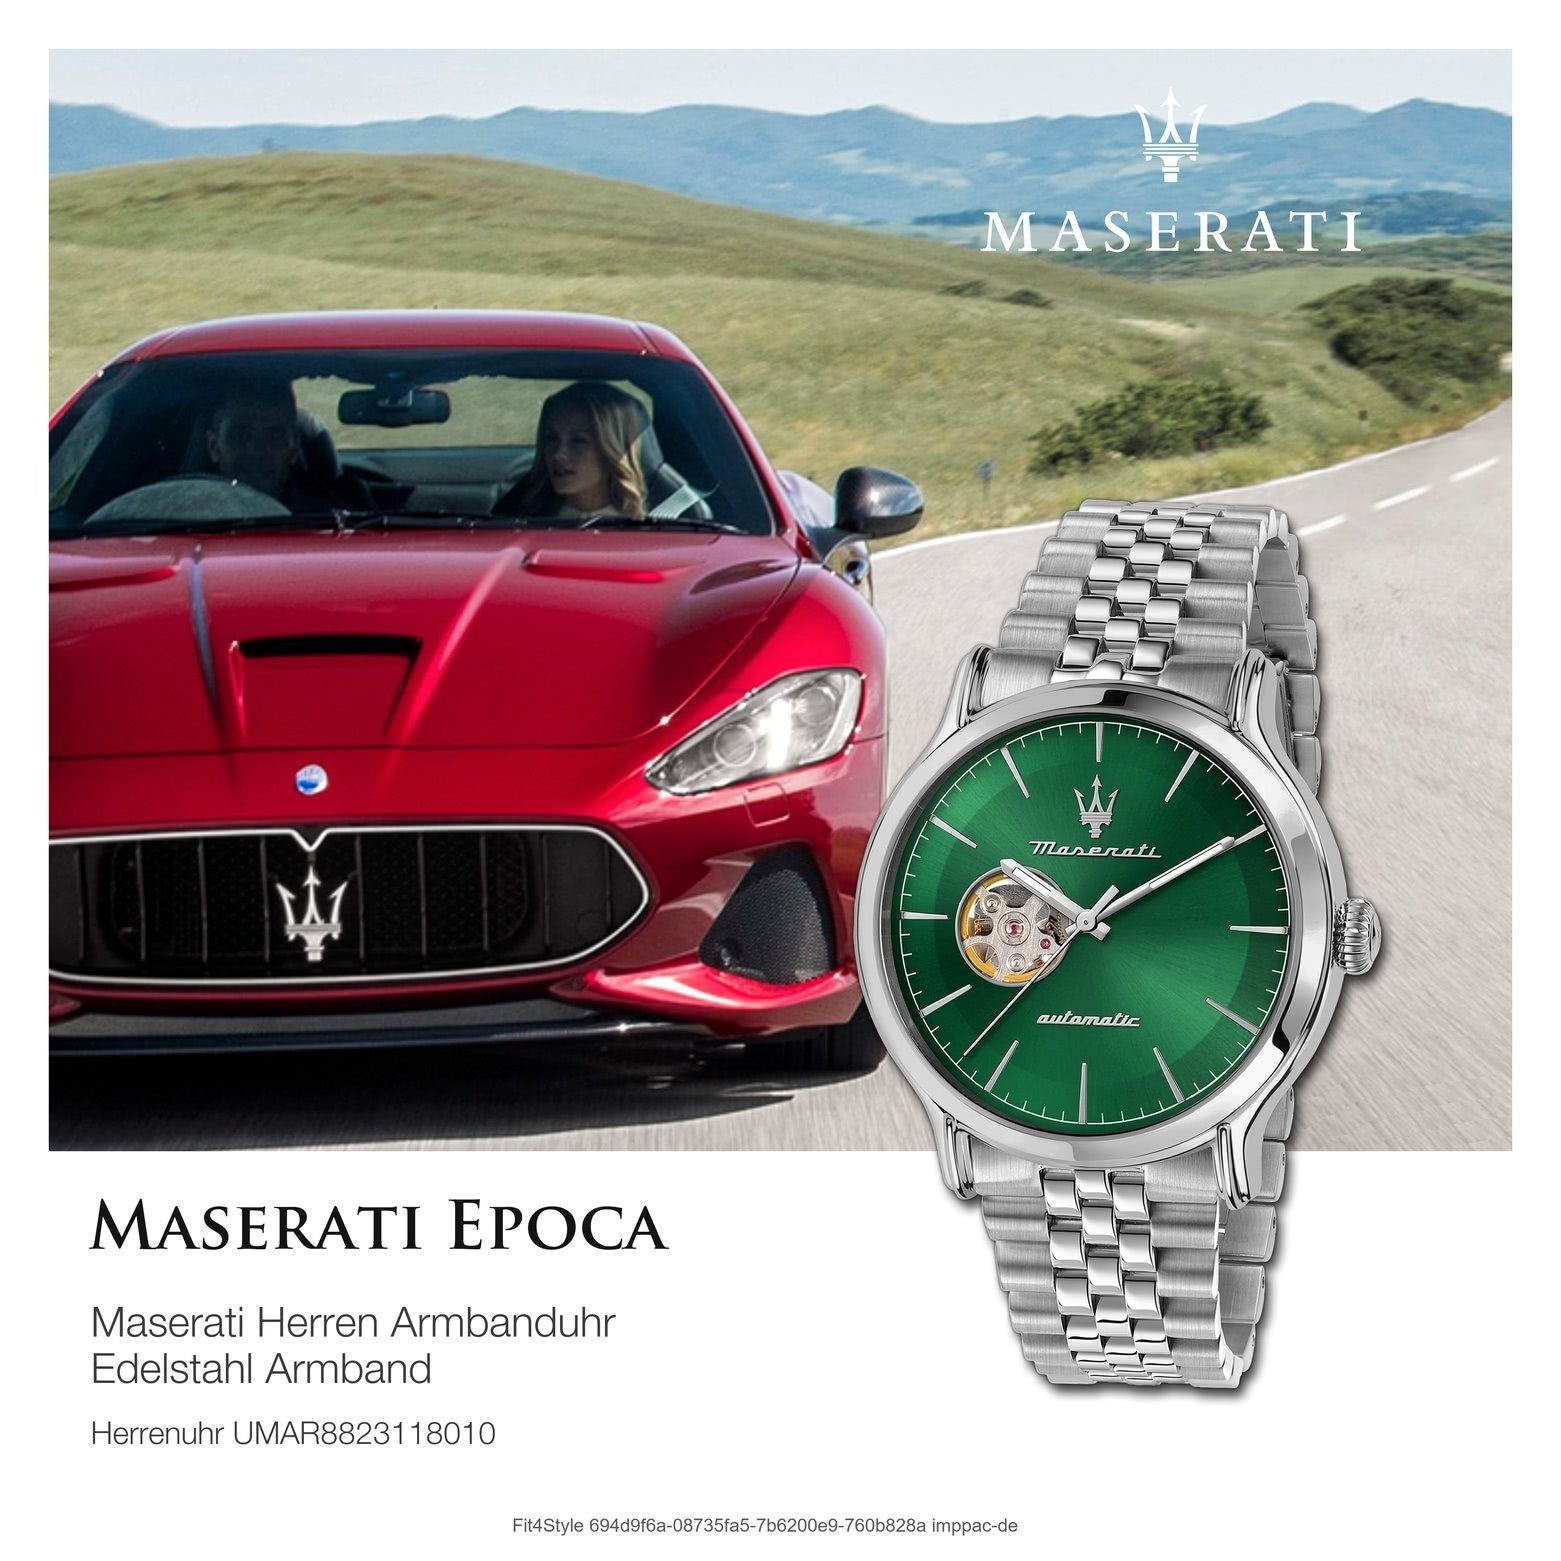 MASERATI Quarzuhr Maserati Herren Armbanduhr grün Herrenuhr Made-In Edelstahlarmband, groß Epoca, rund, (ca. 42mm) Italy